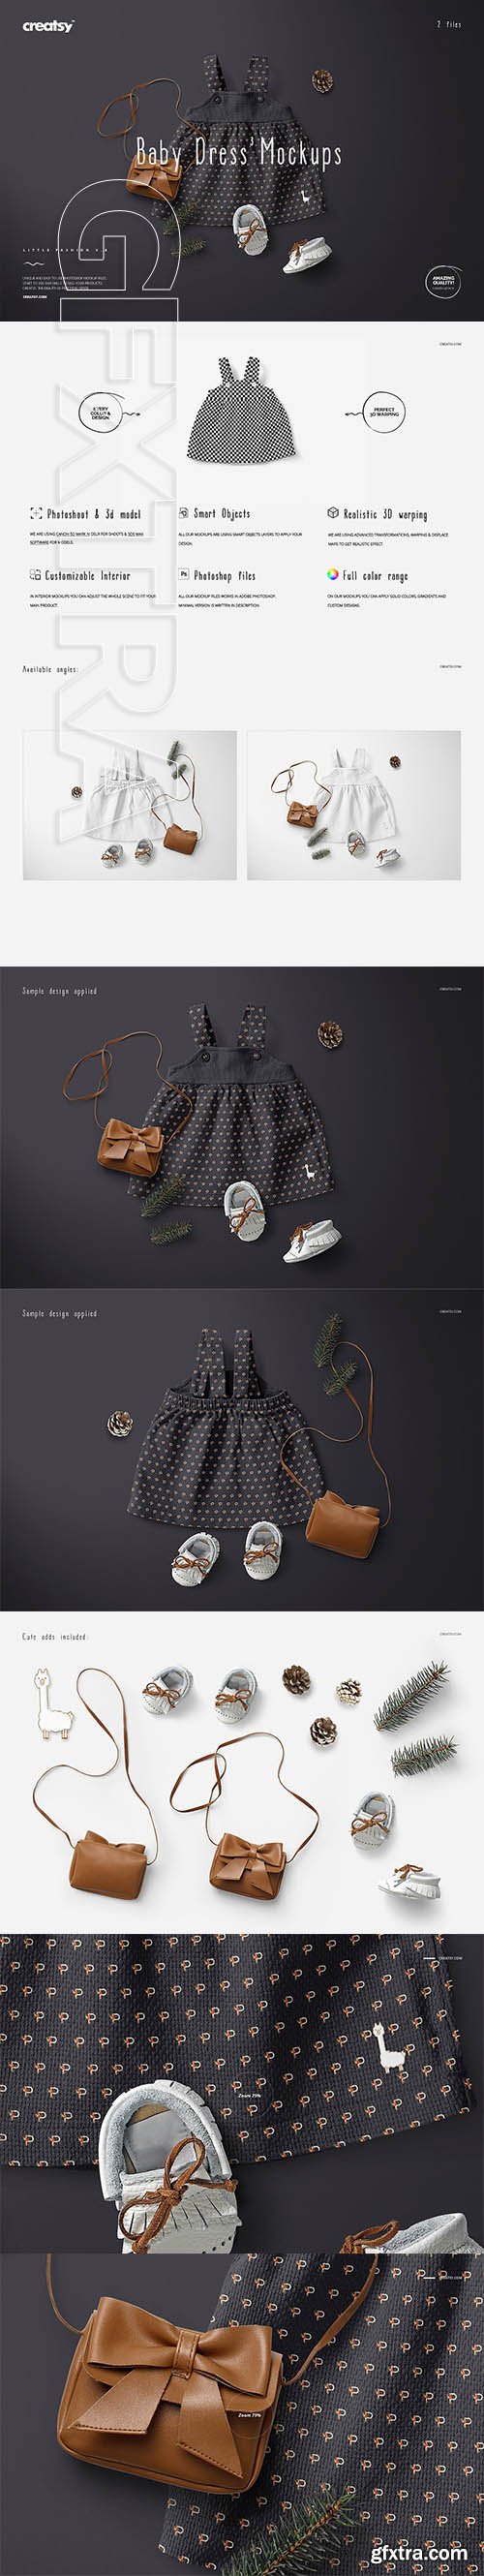 CreativeMarket - Baby Dress Mockup Set 3 2418691